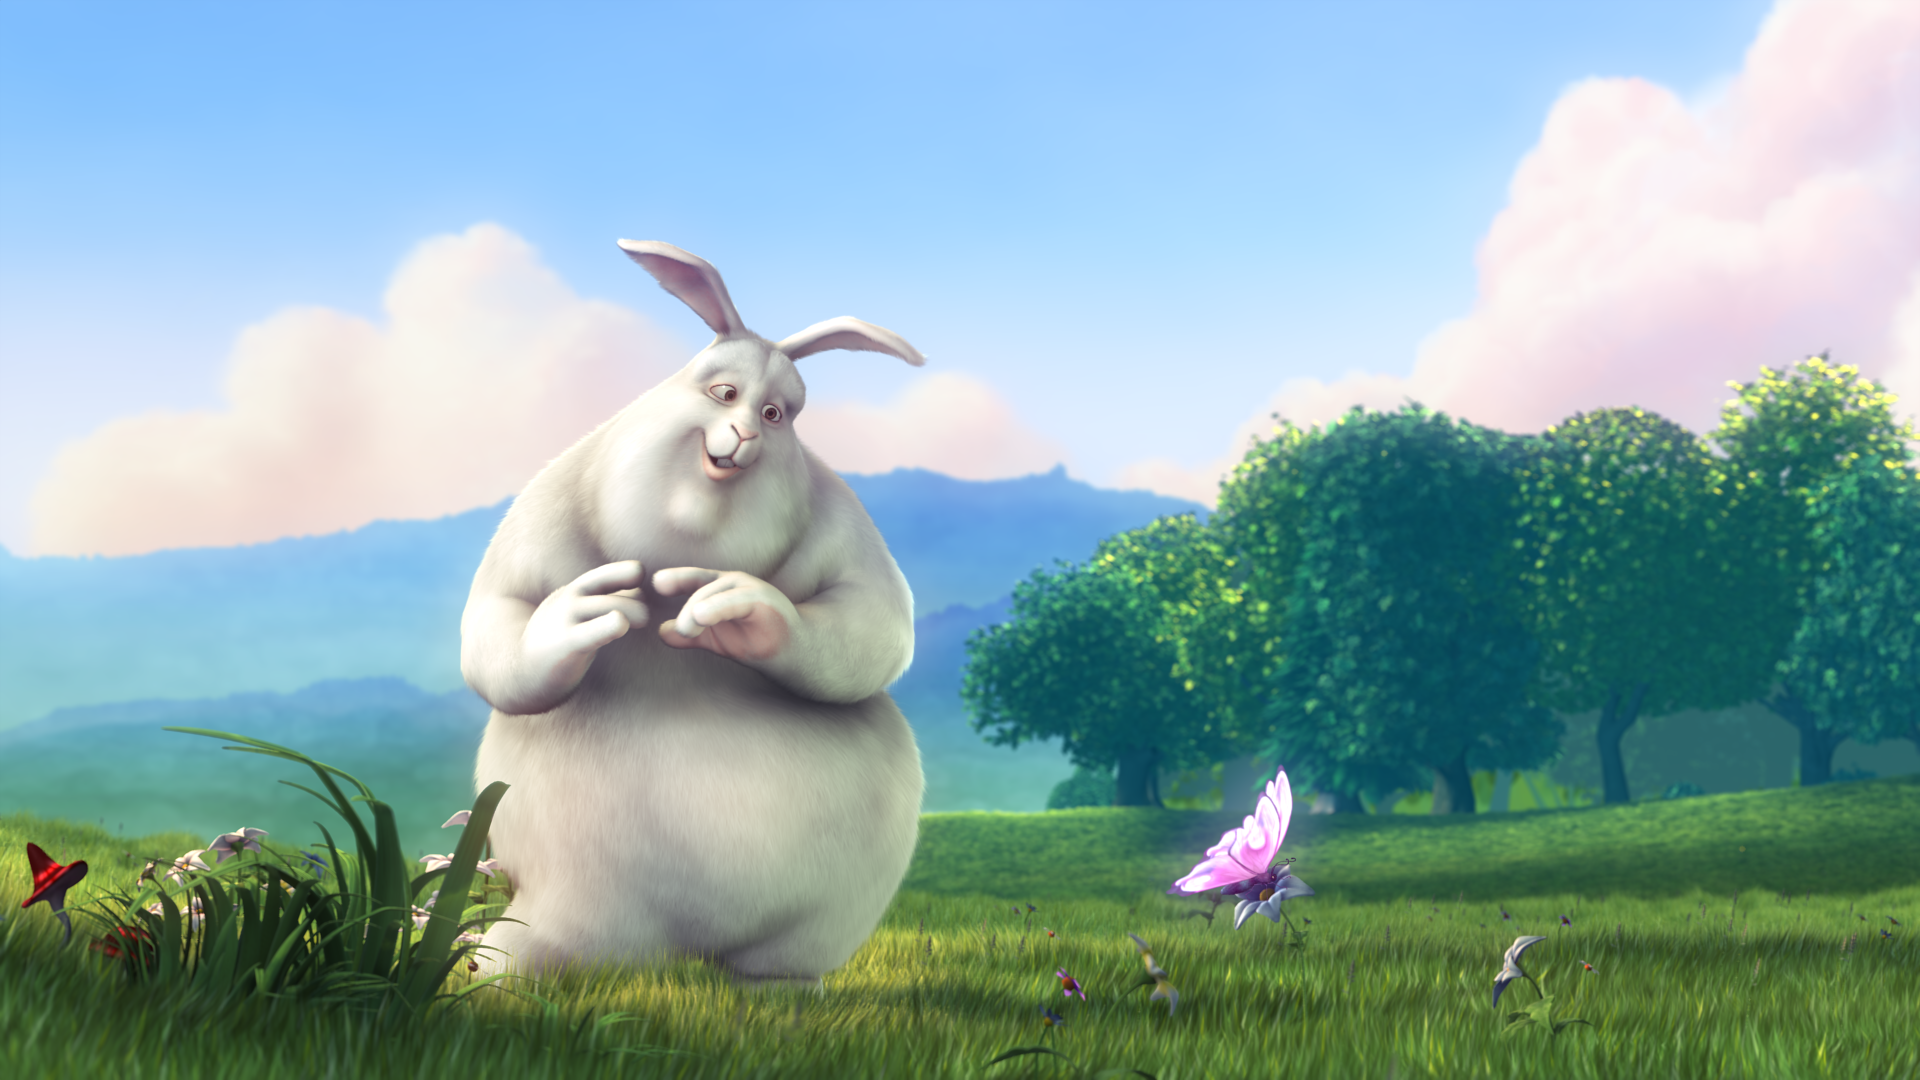 1001 Animations: Big Buck Bunny by finalmaster24 on DeviantArt